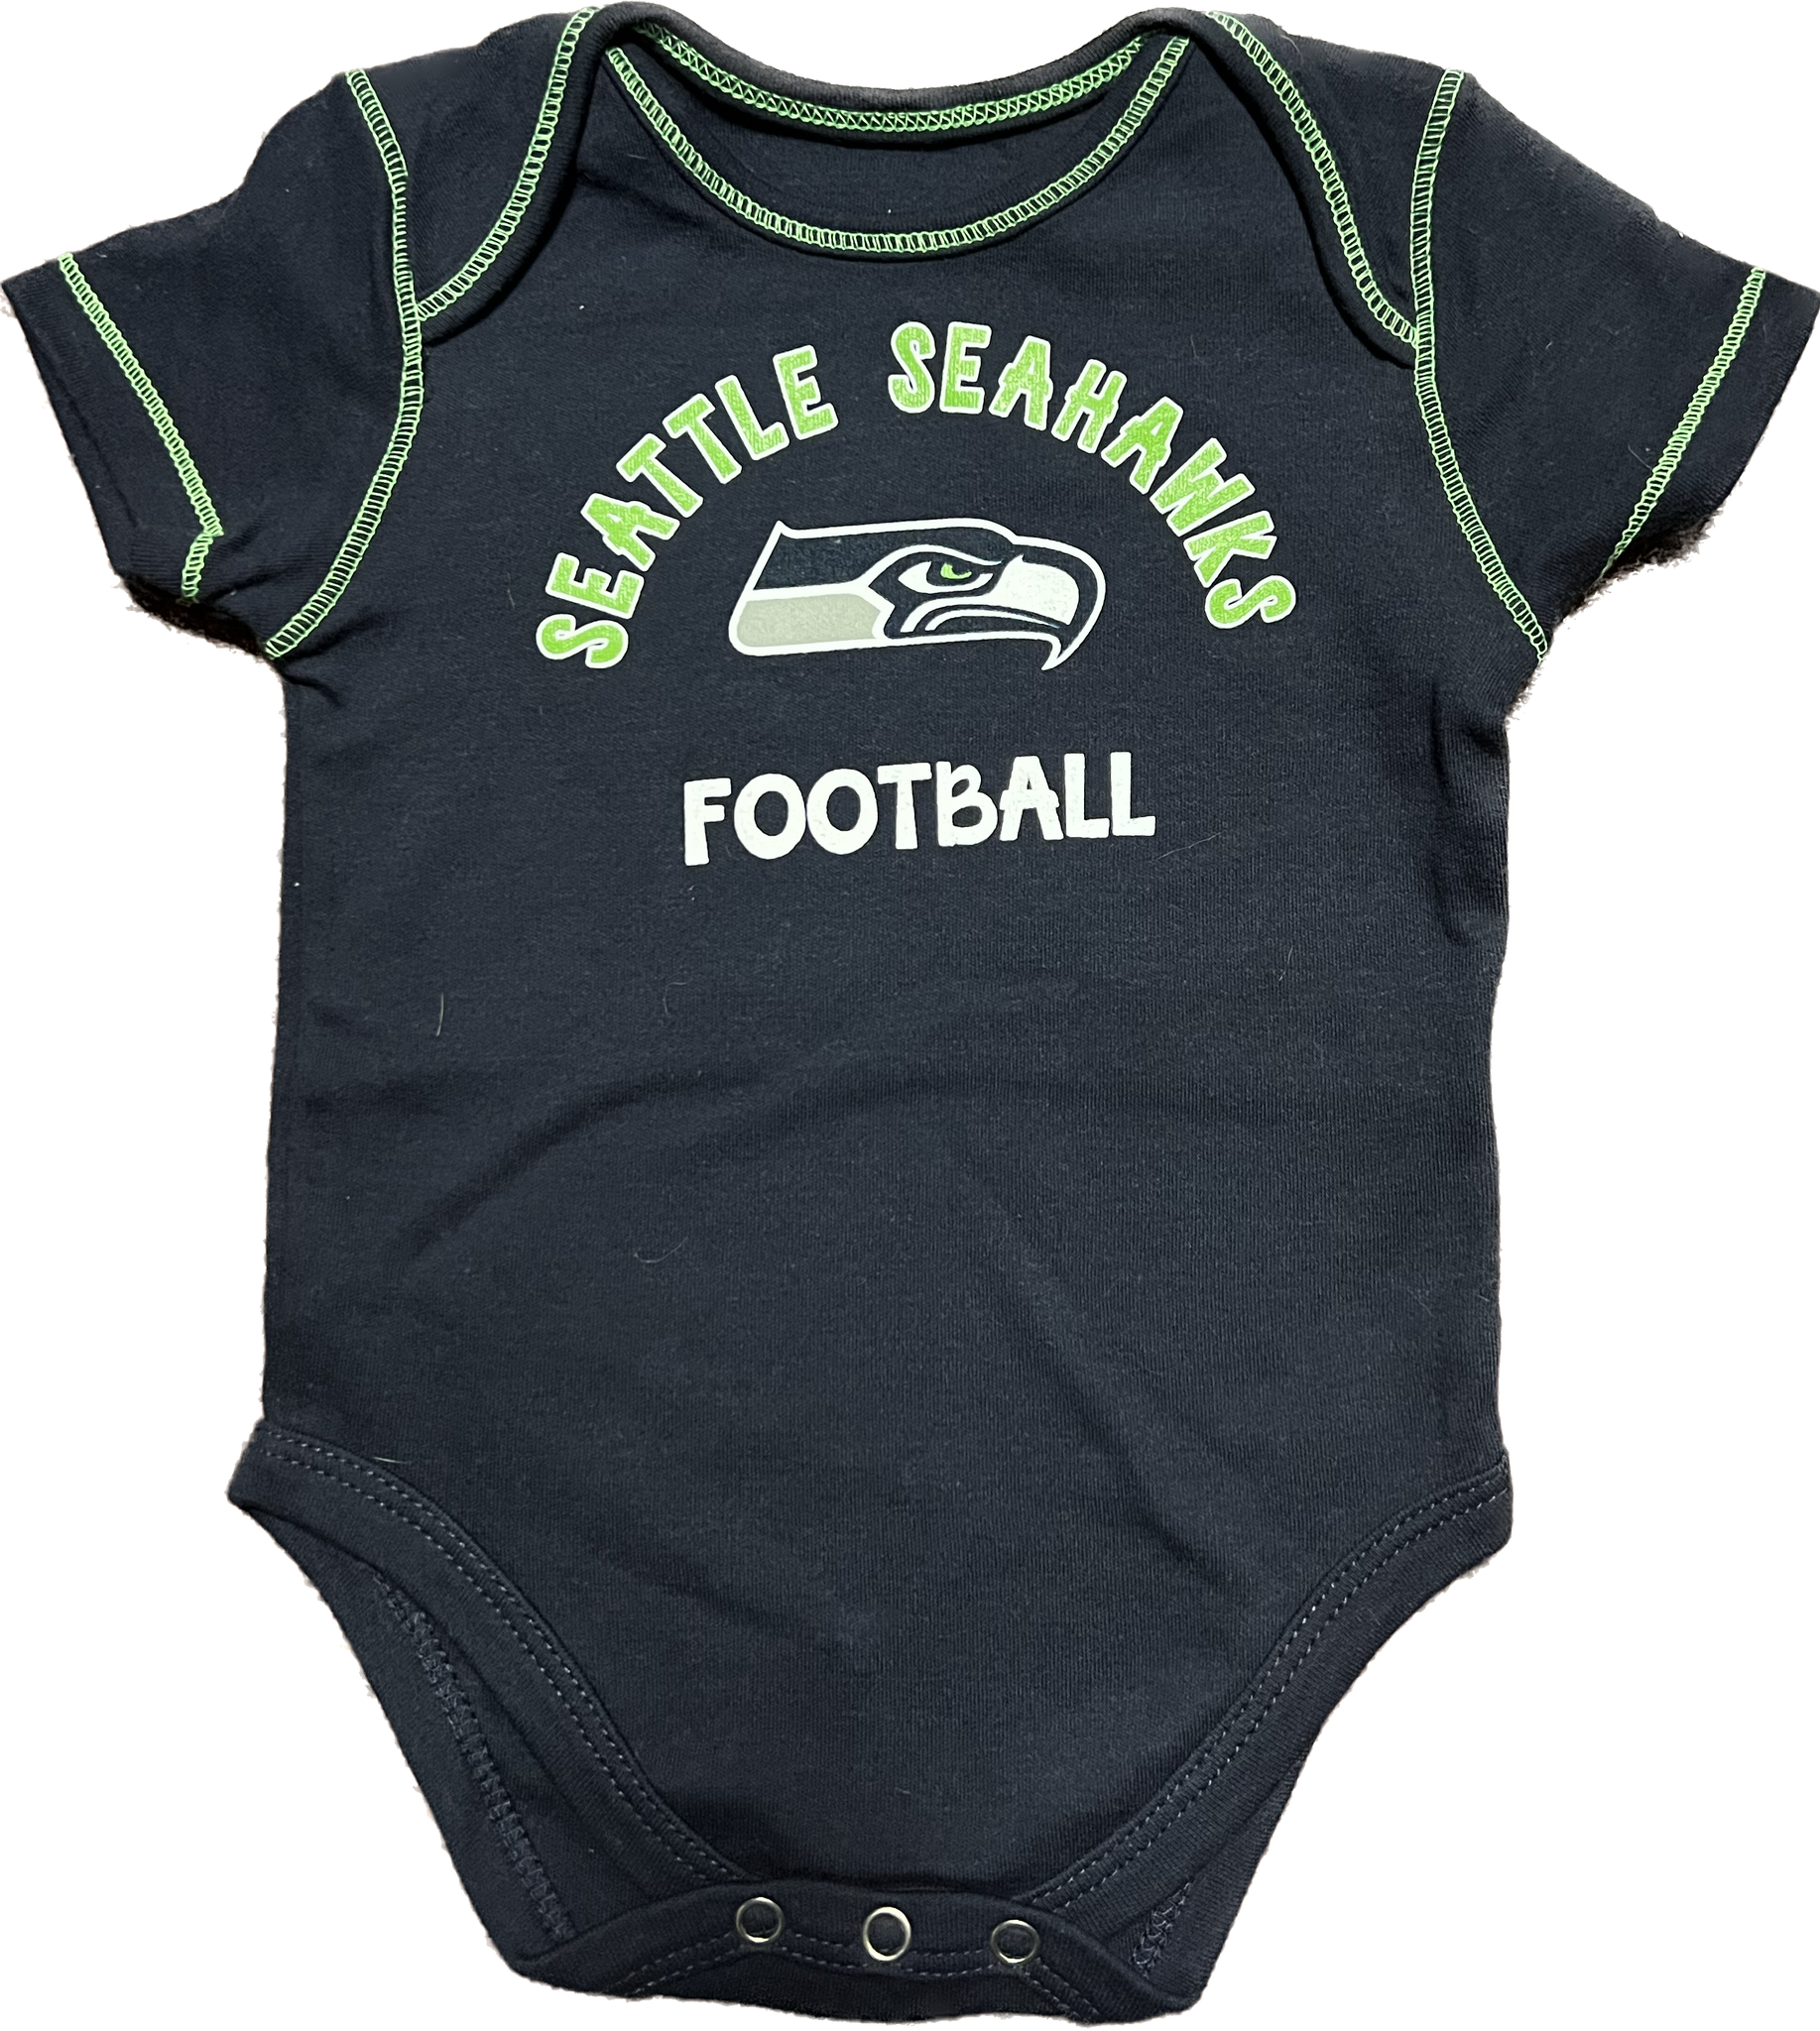 Infant Boys NFL Newborn to 3MO